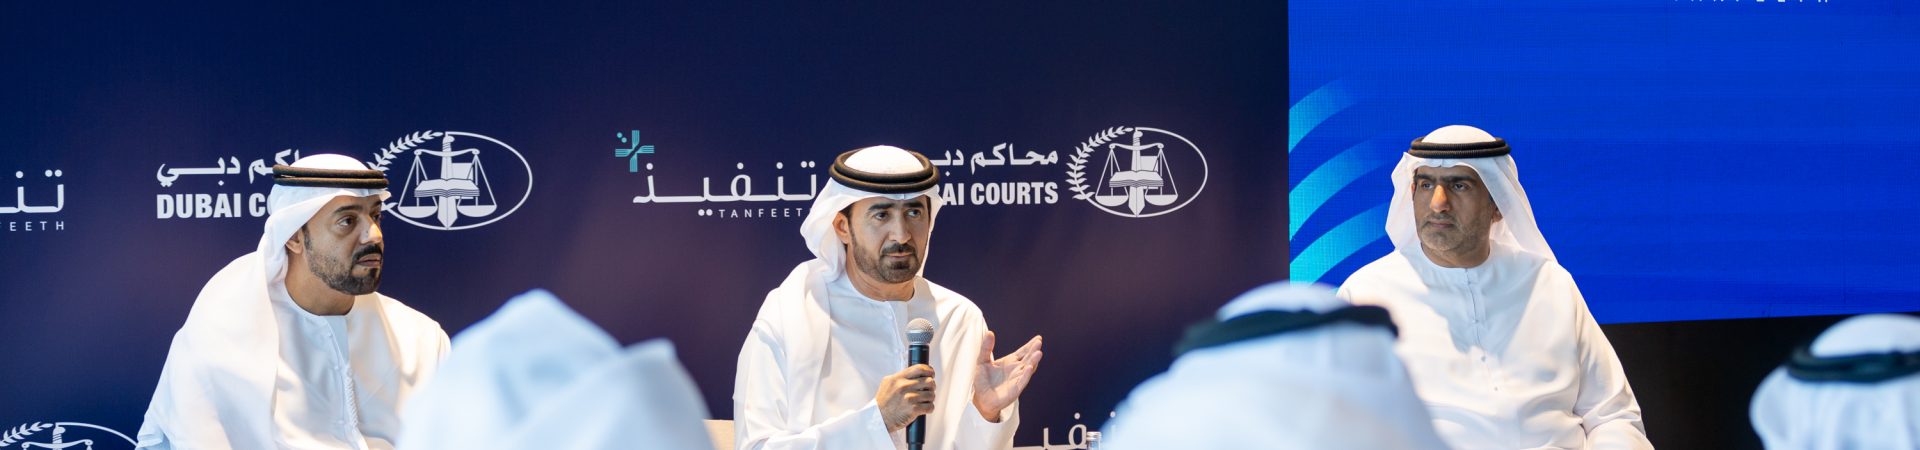 Dubai courts introduce transparent digital system for enforcing judgements